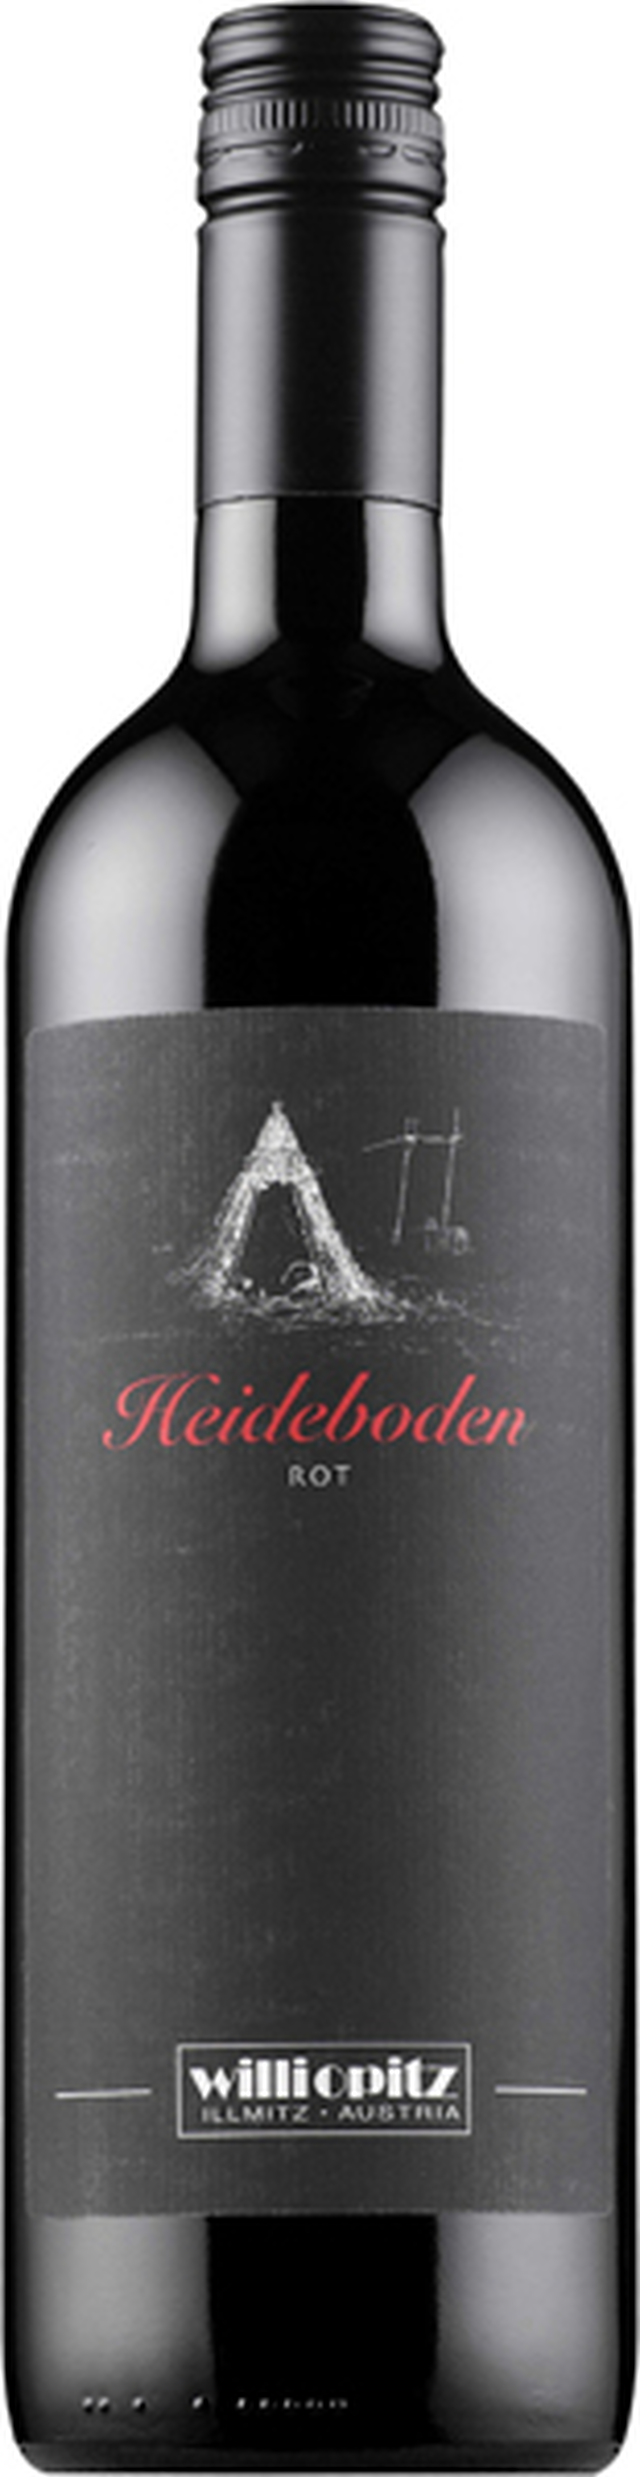 Perjantain viinivinkki - Heideboden Rot 2011